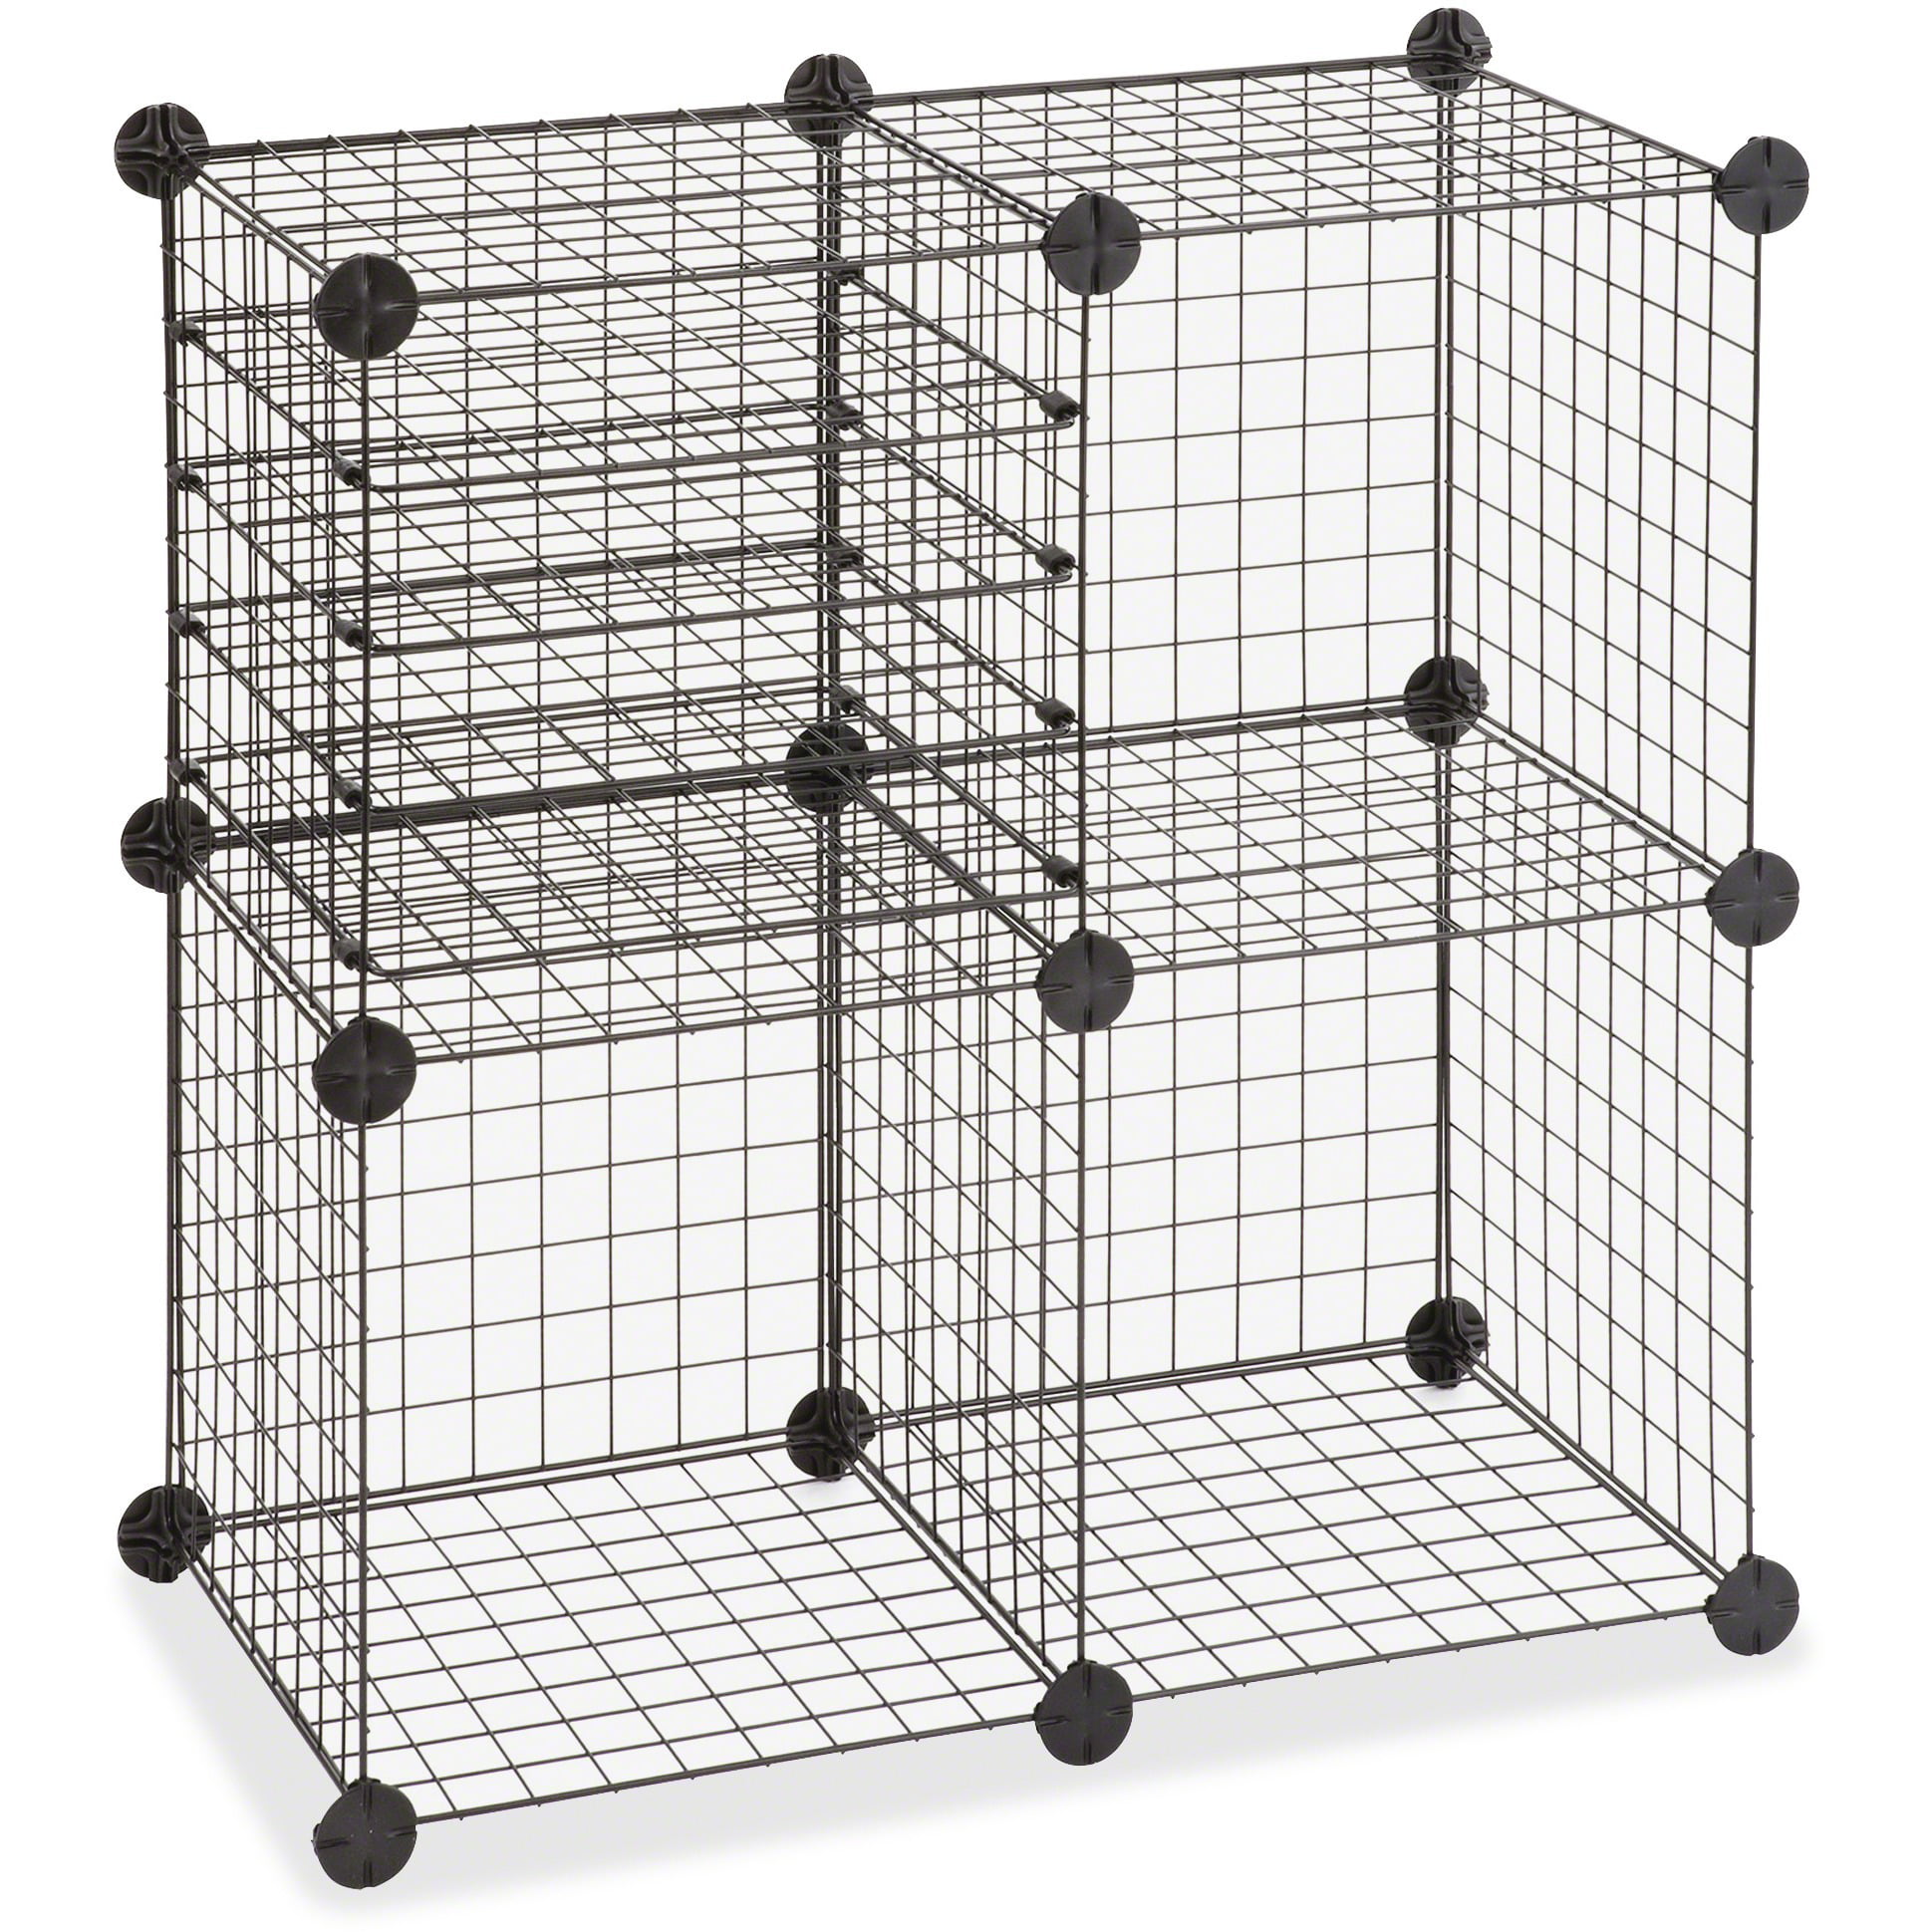 Safco Saf5279bl Wire Cubes Set 1, Metallic 4 Cube Wire Storage Shelves